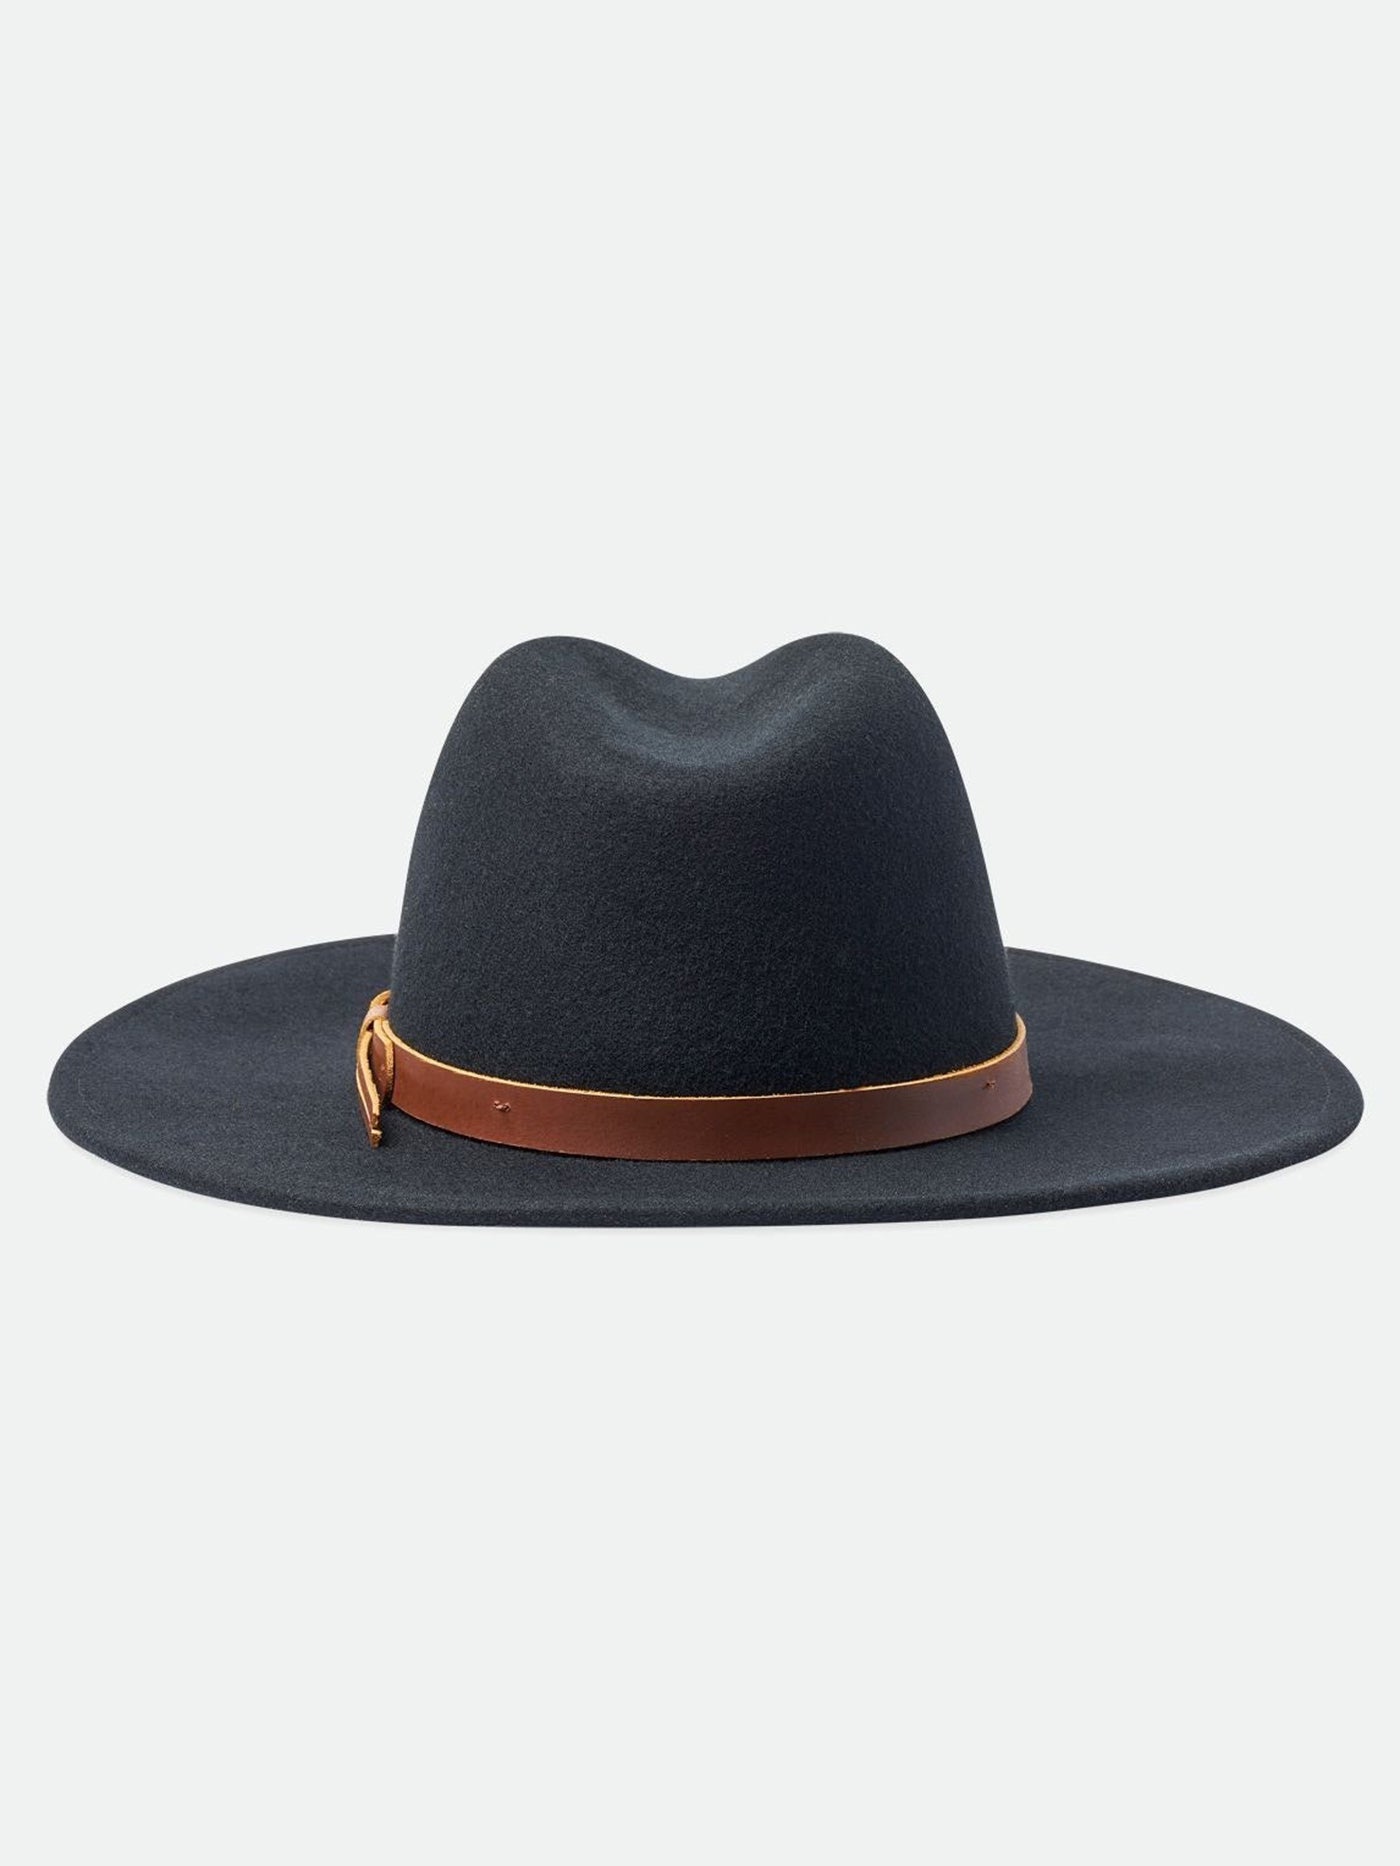 Brixton Feild Proper Hat